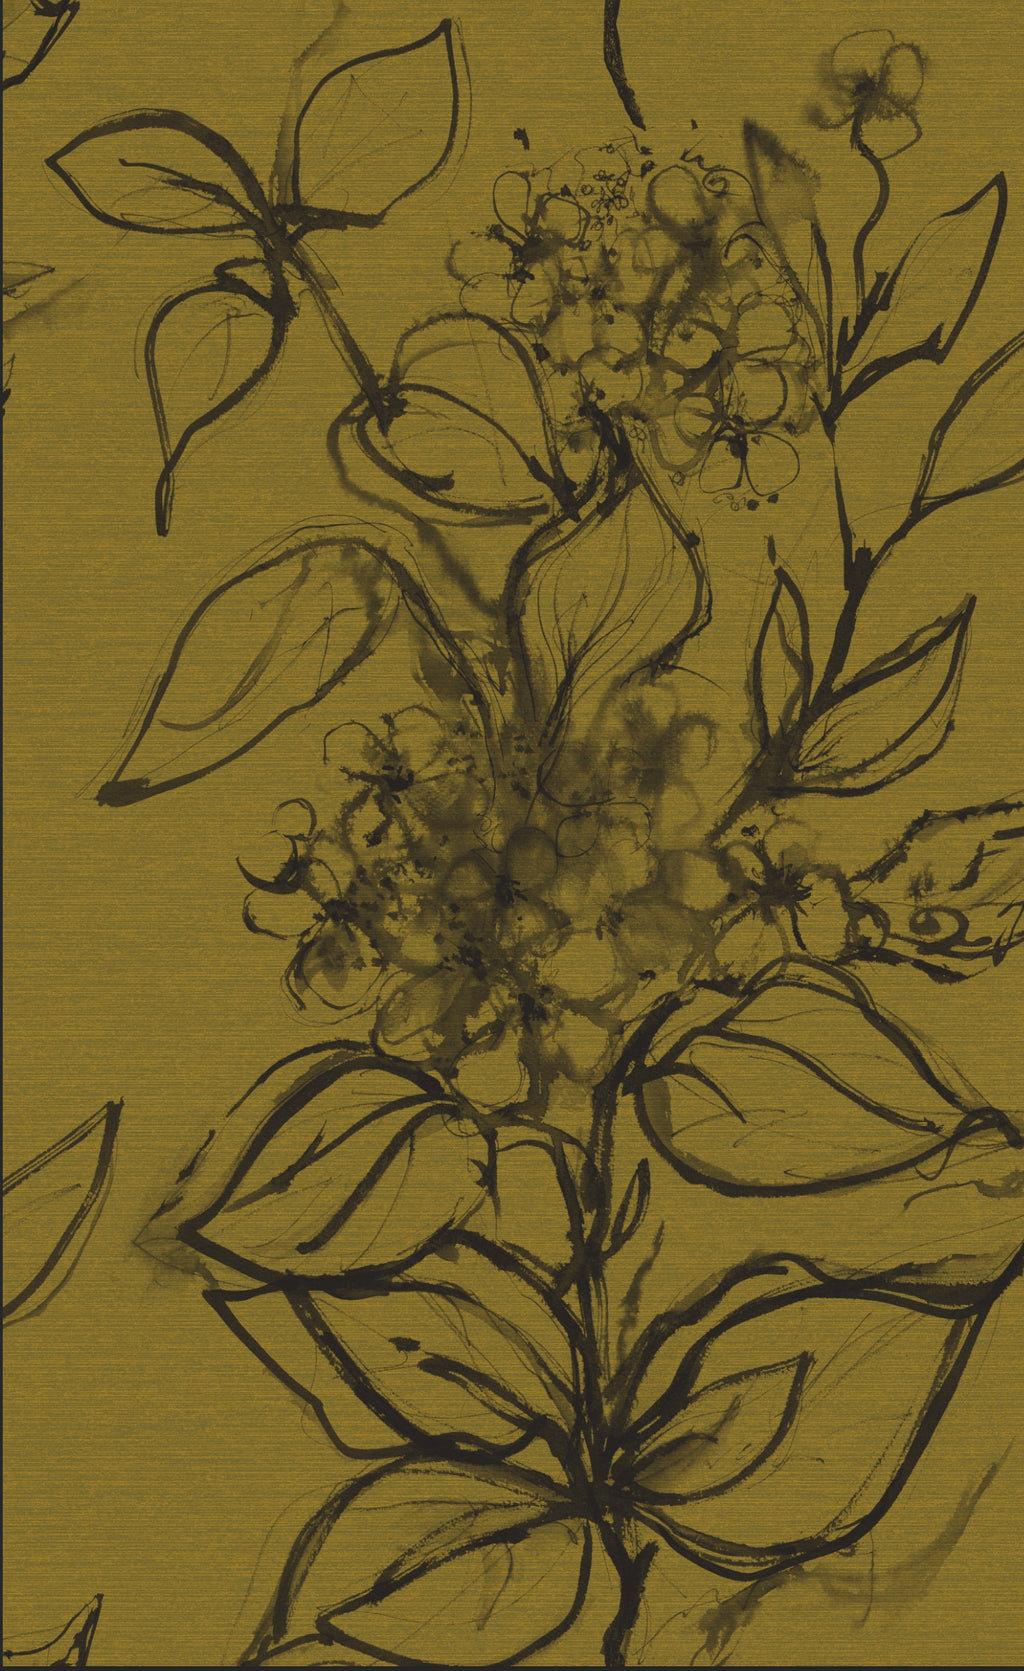 Aquatint floral Wallpaper - Mustard + Black